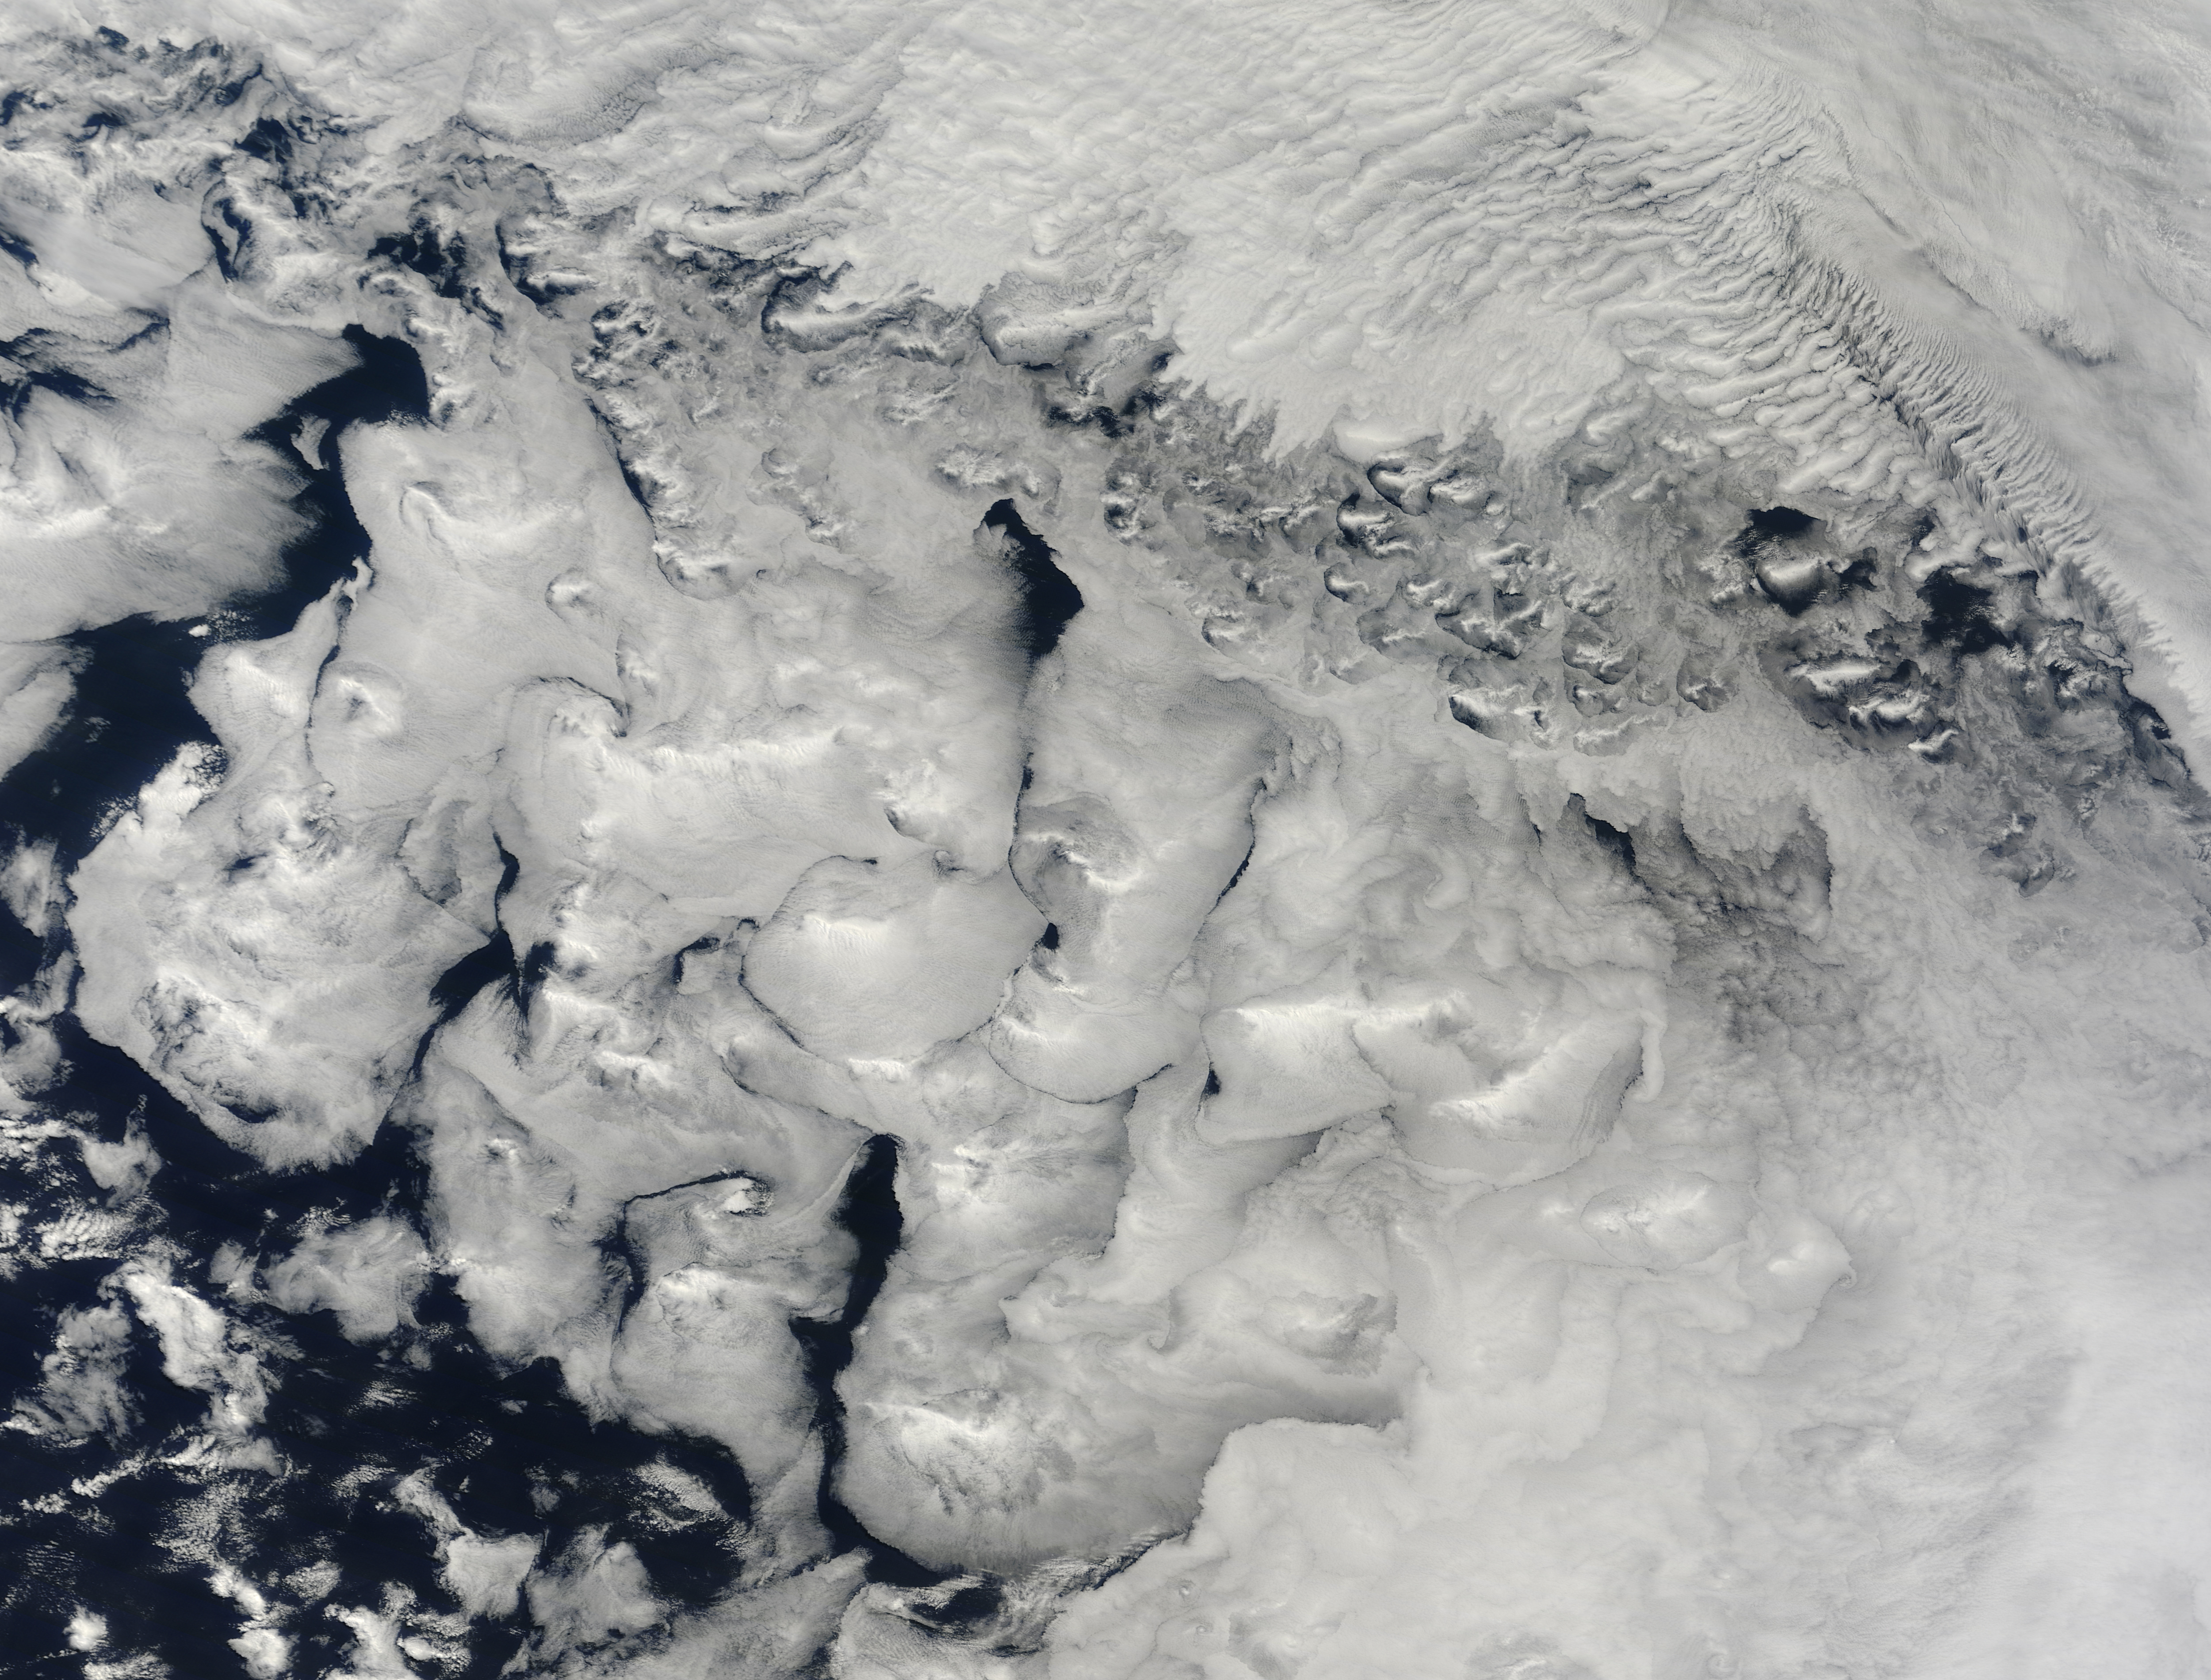 nimbostratus clouds from satellite